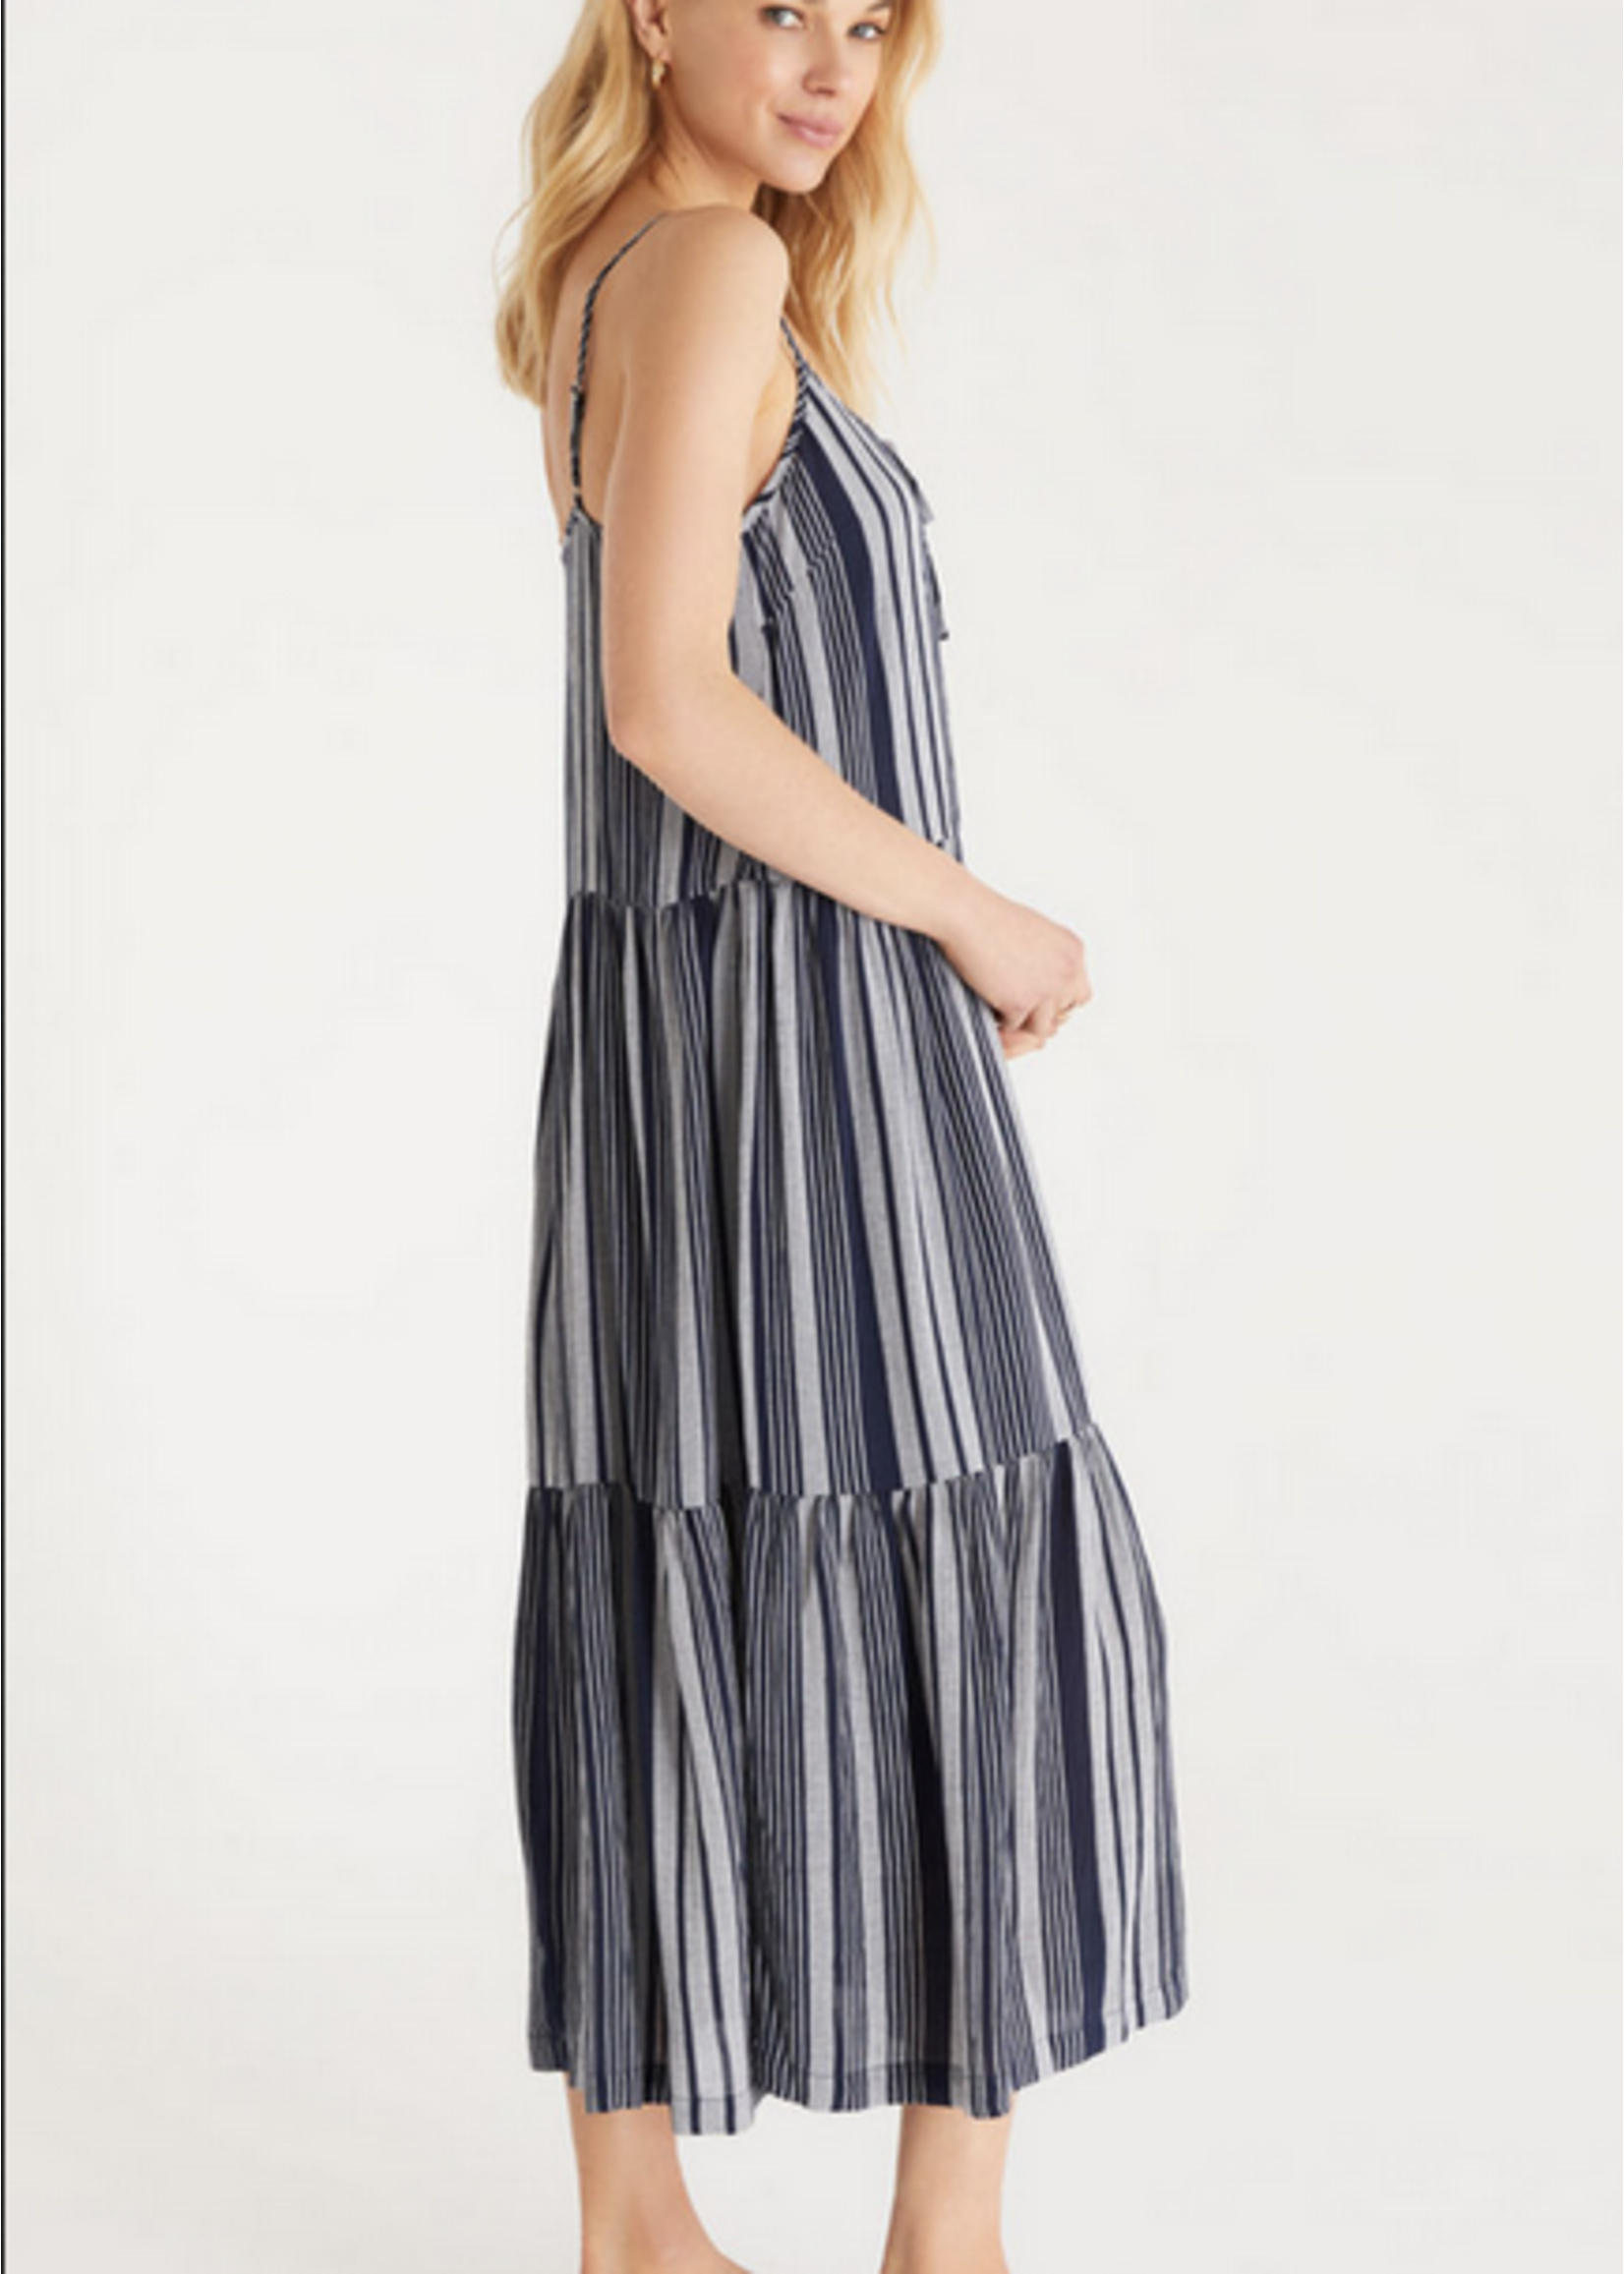 Z Supply Blaire Striped Dress